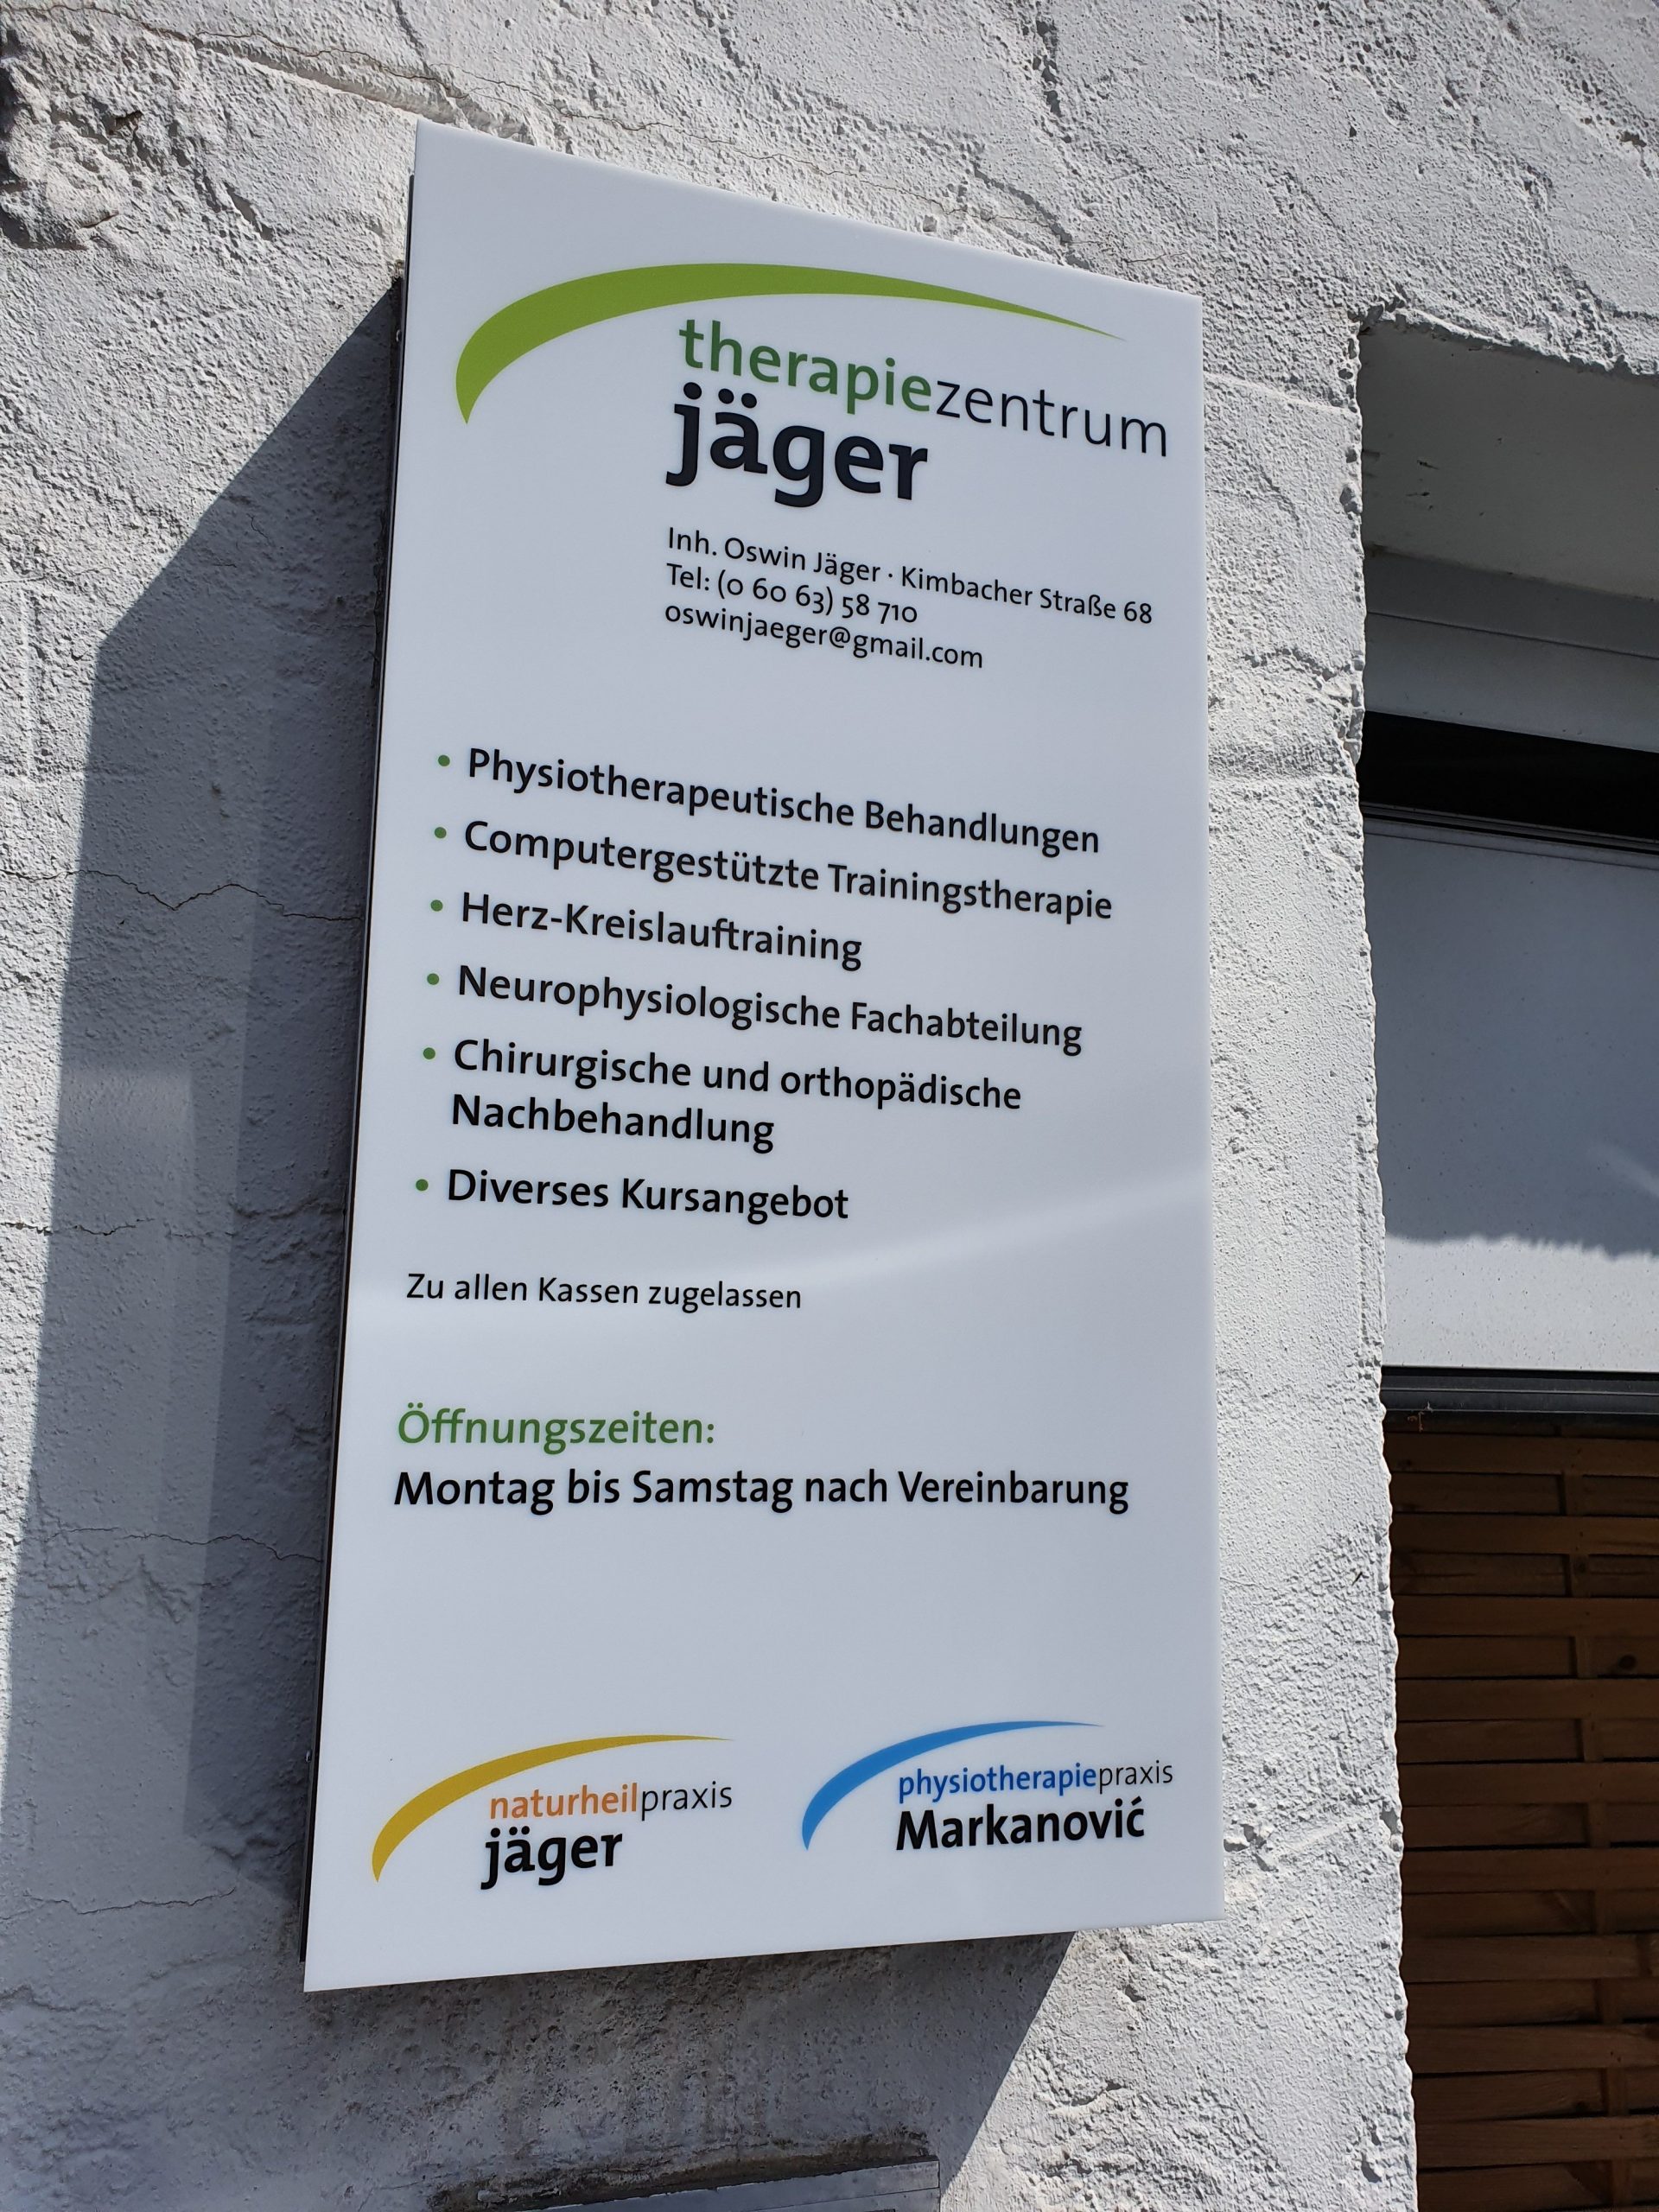 Rehasport in Bad König - Therapiezentrum Jäger